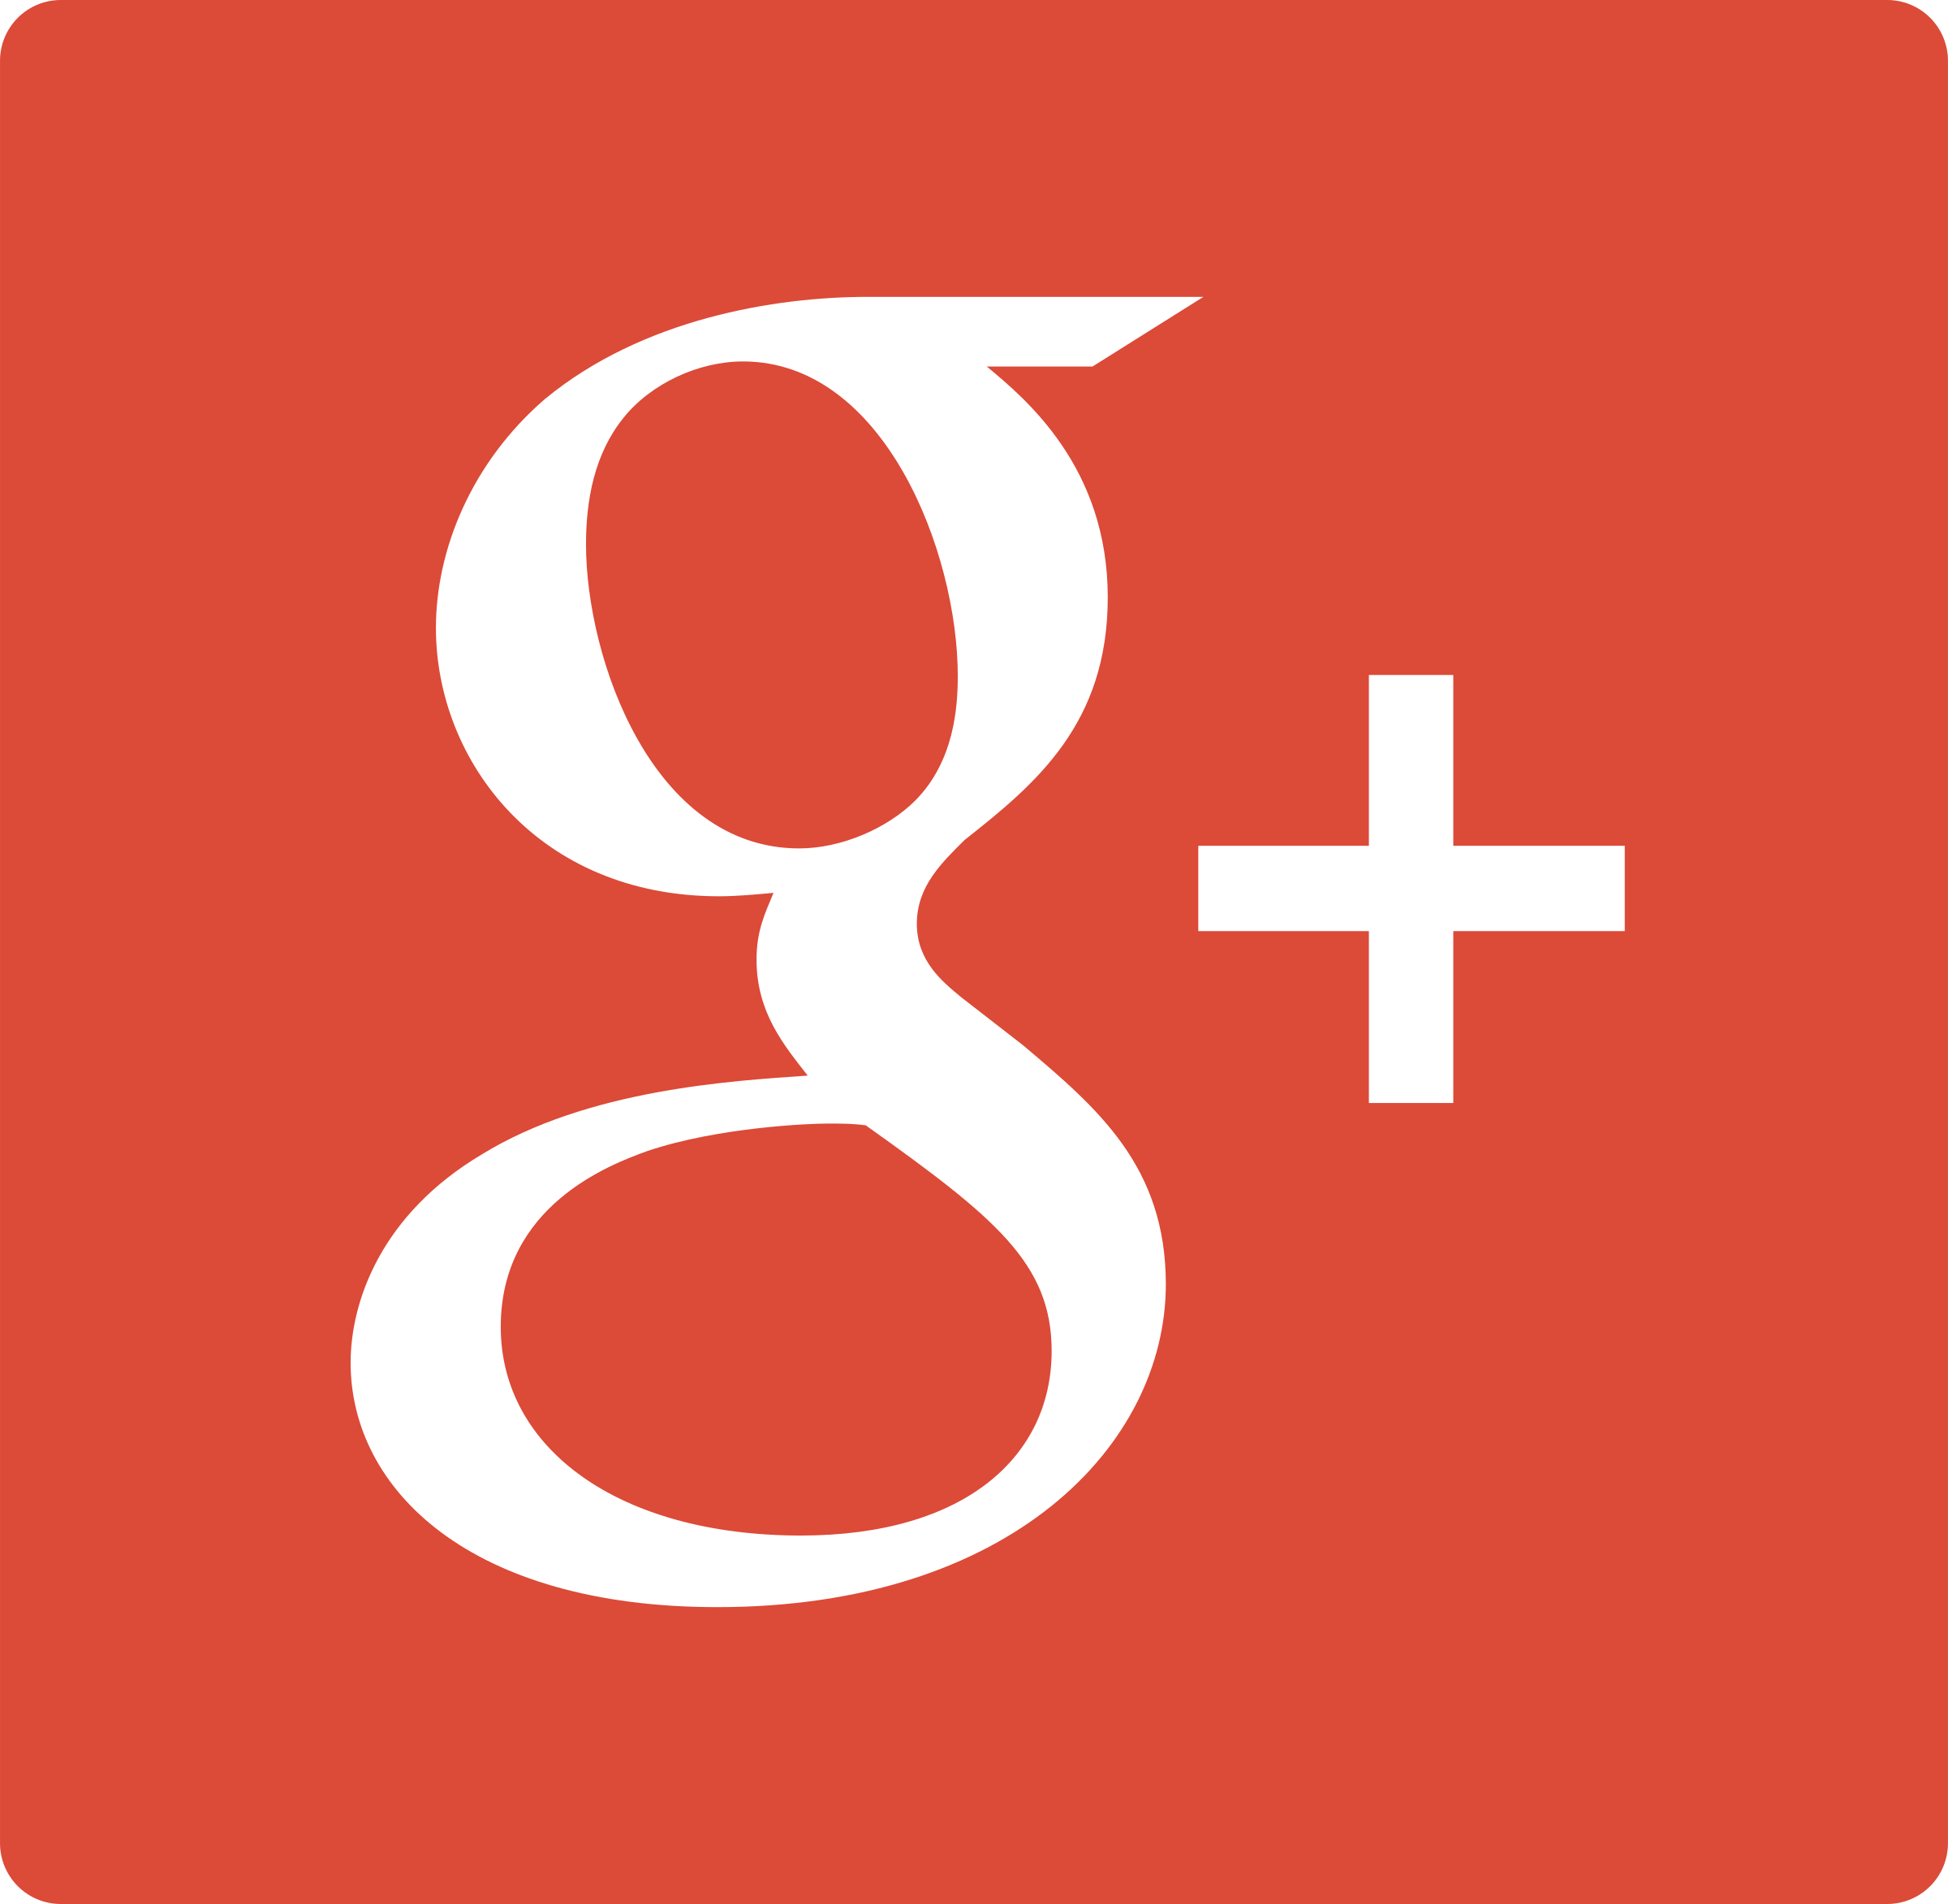 Google Plus Logo - Google plus Logo PNG Transparent & SVG Vector - Freebie Supply